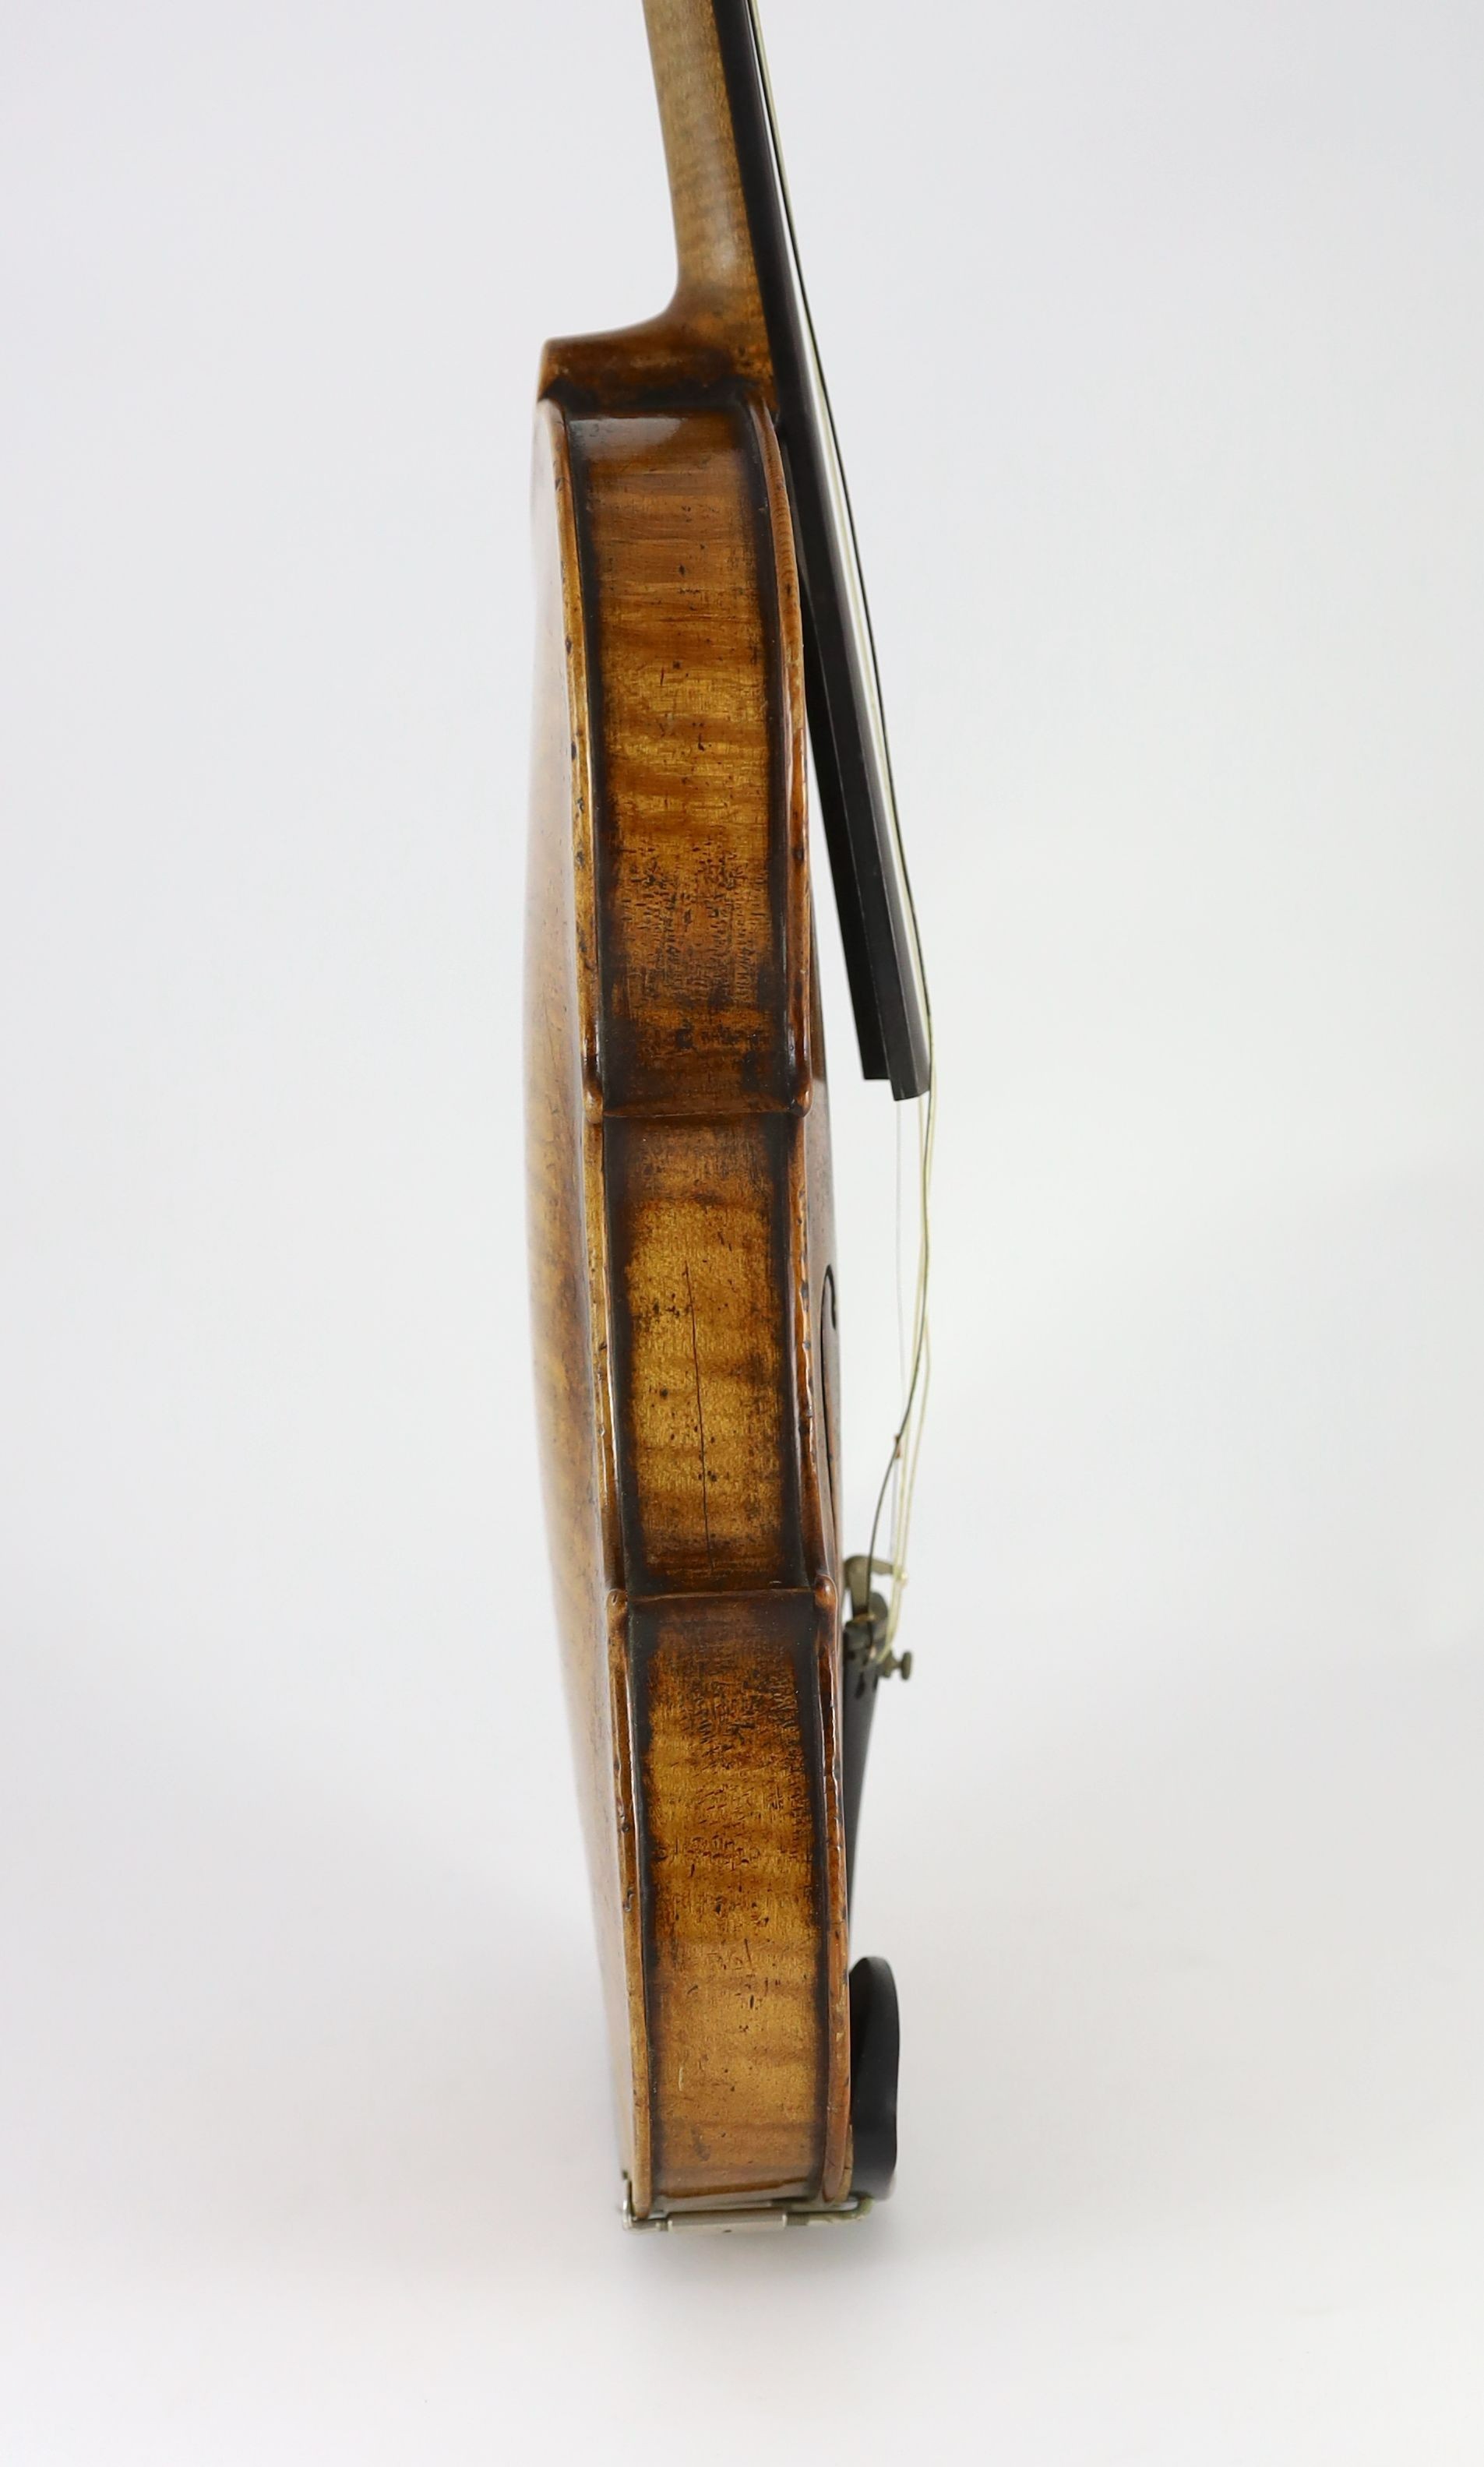 A 19th century violin, degraded internal paper label reads ‘Amati’, back measurement 36cm